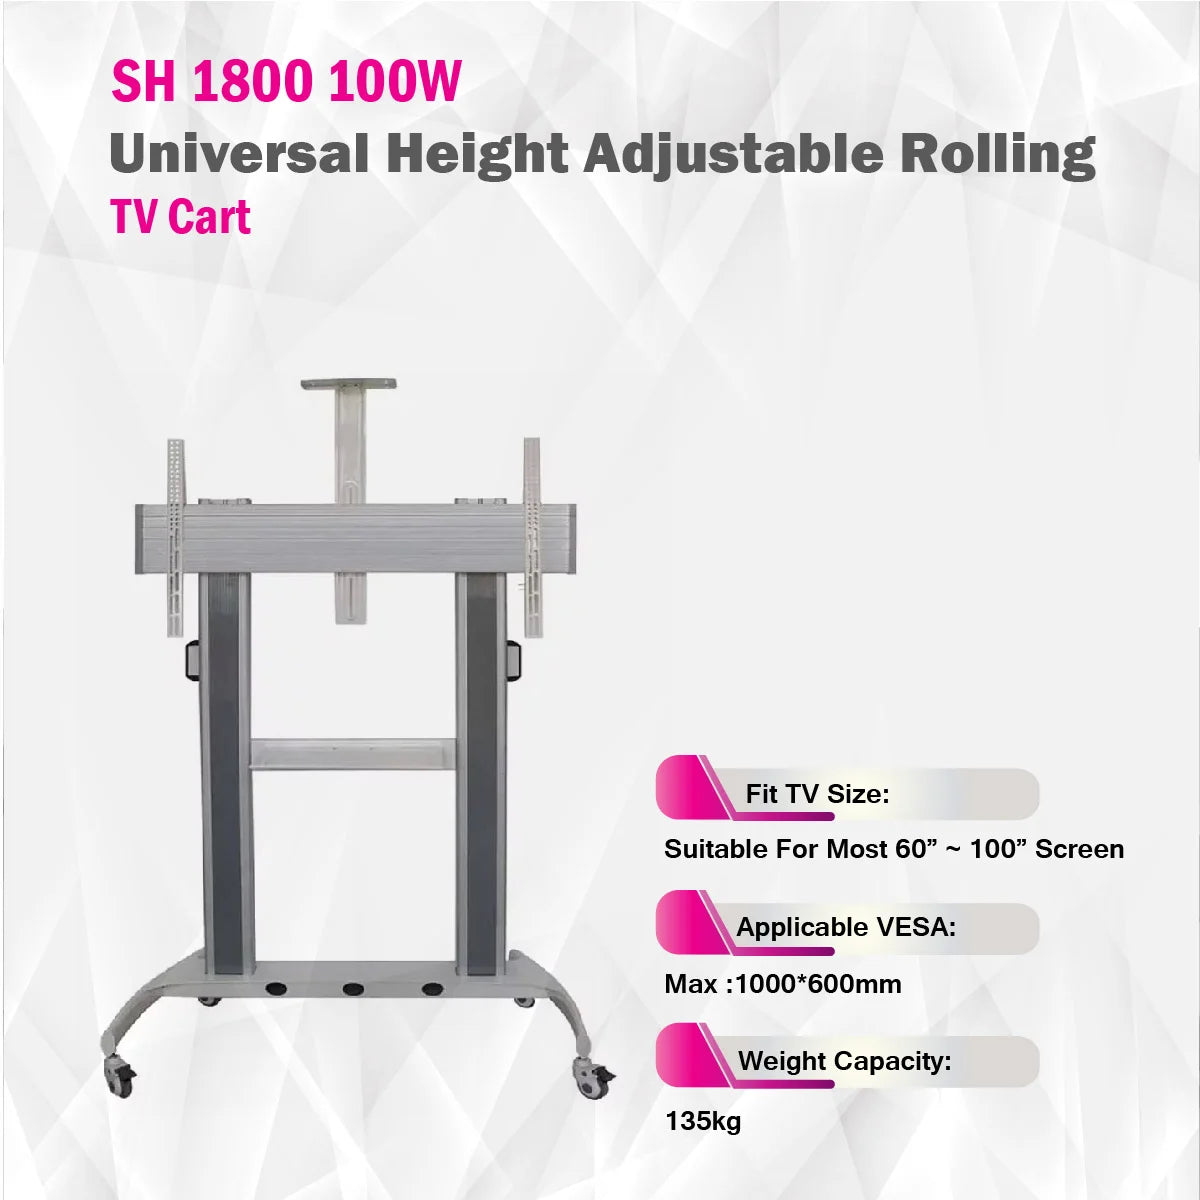 Skilltech- SH 1800 100W - Universal Height Adjustable Rolling Tv Stand